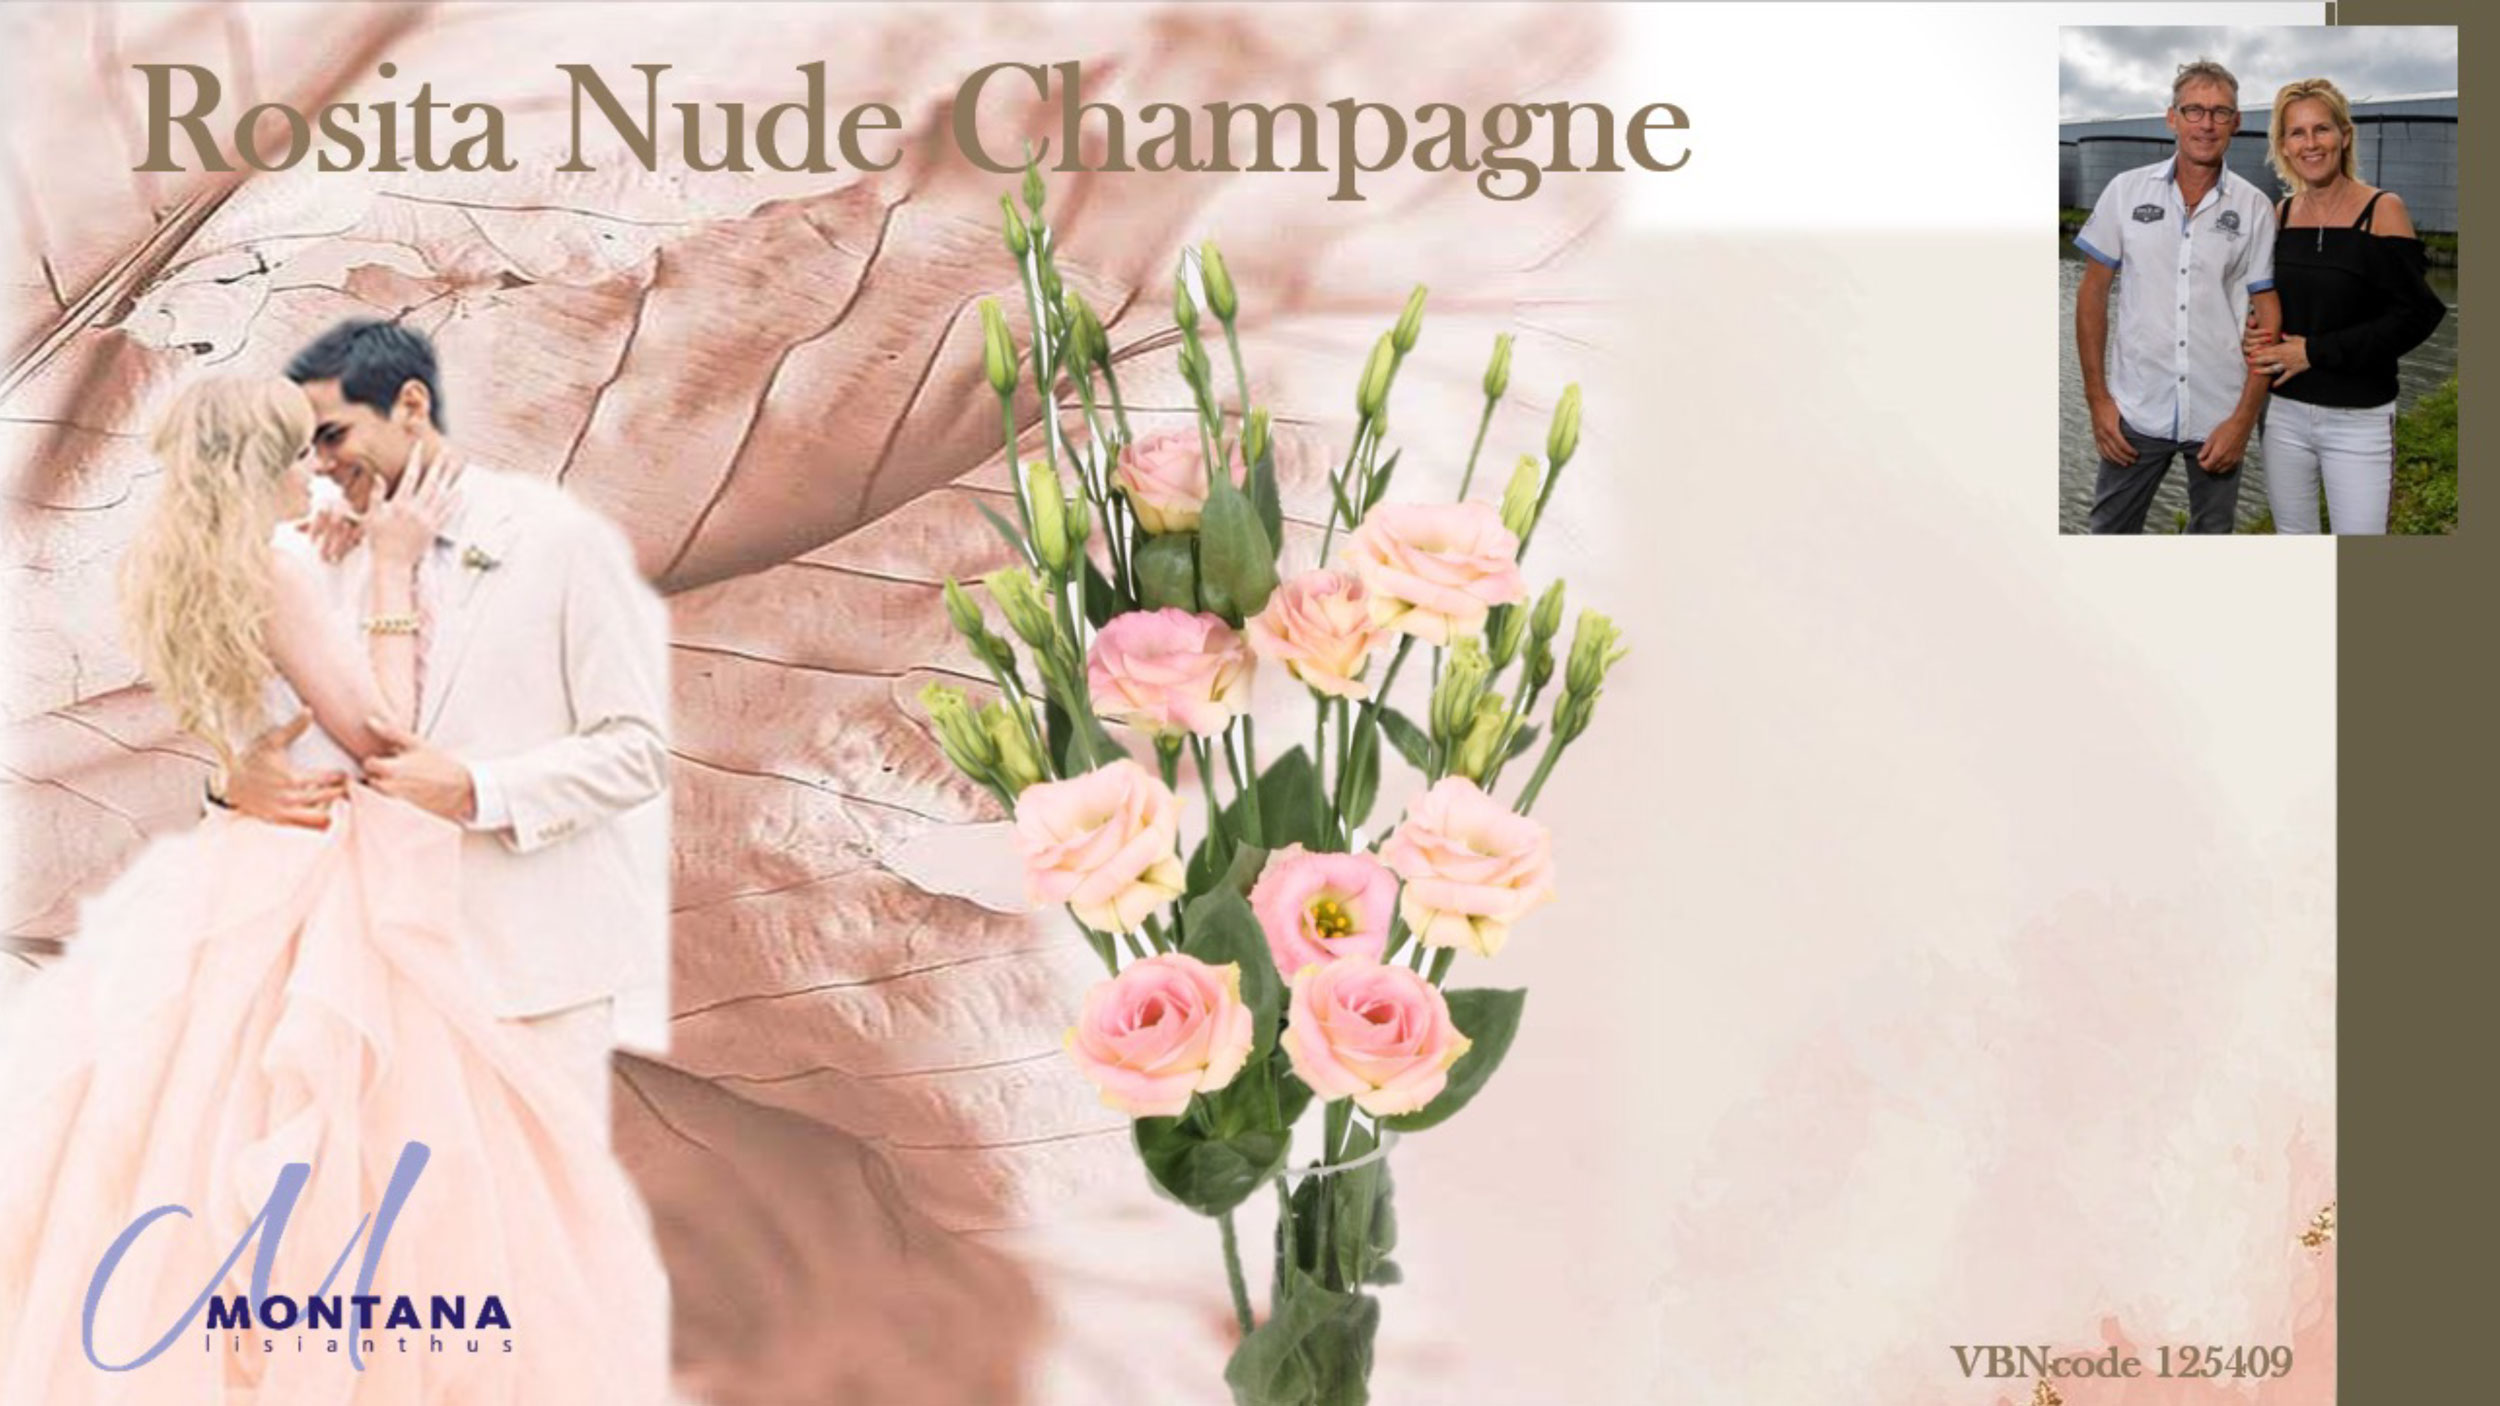 Montanas Rosita Nude Champagne engels 2